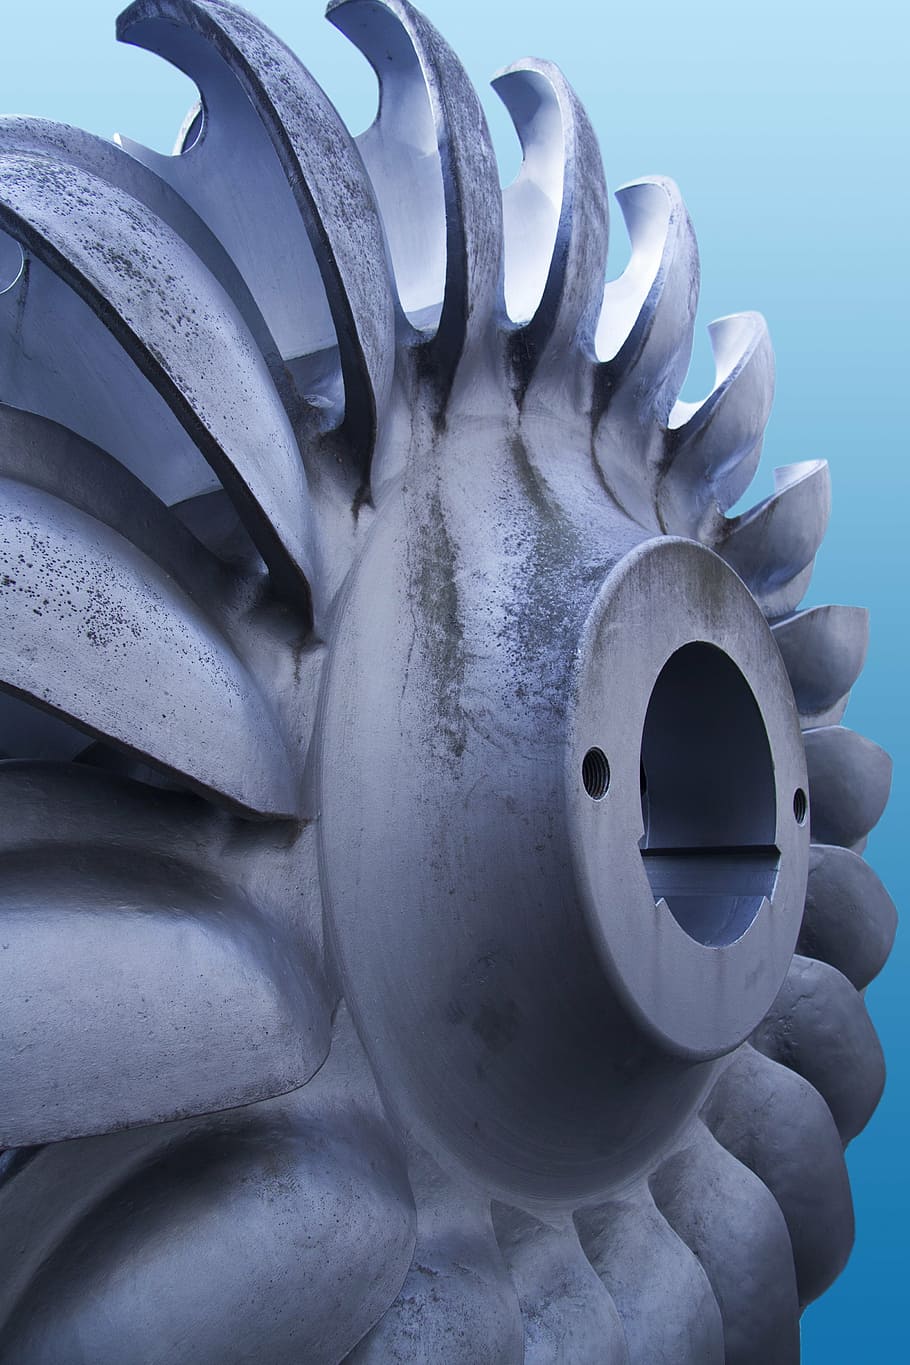 gray metal gear illustration, turbine, steel, electric, current